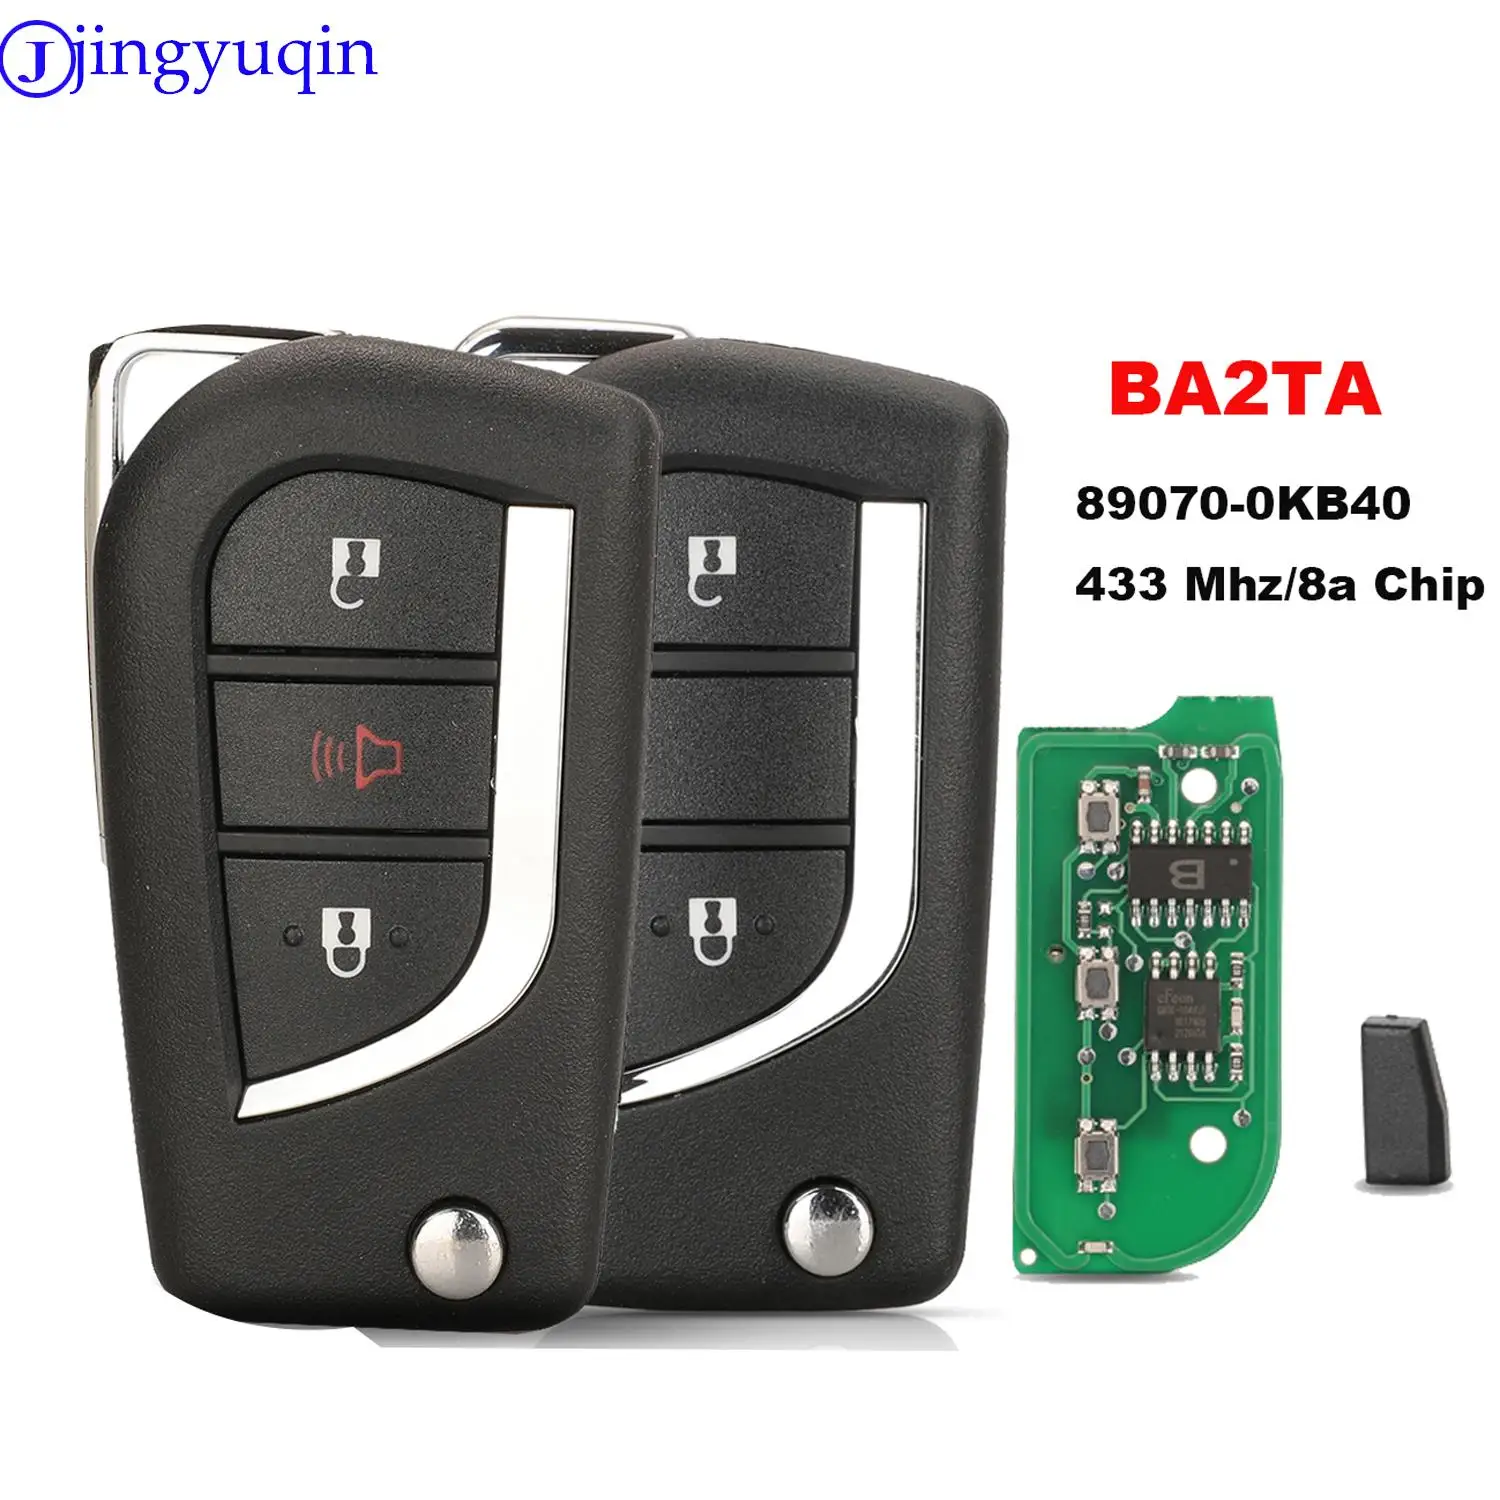 Jingyuqin telecomando chiave auto p/n fcfccid: BA2TA per Toyota Hilux 2015 2020 8A Chip 89070-0KB40